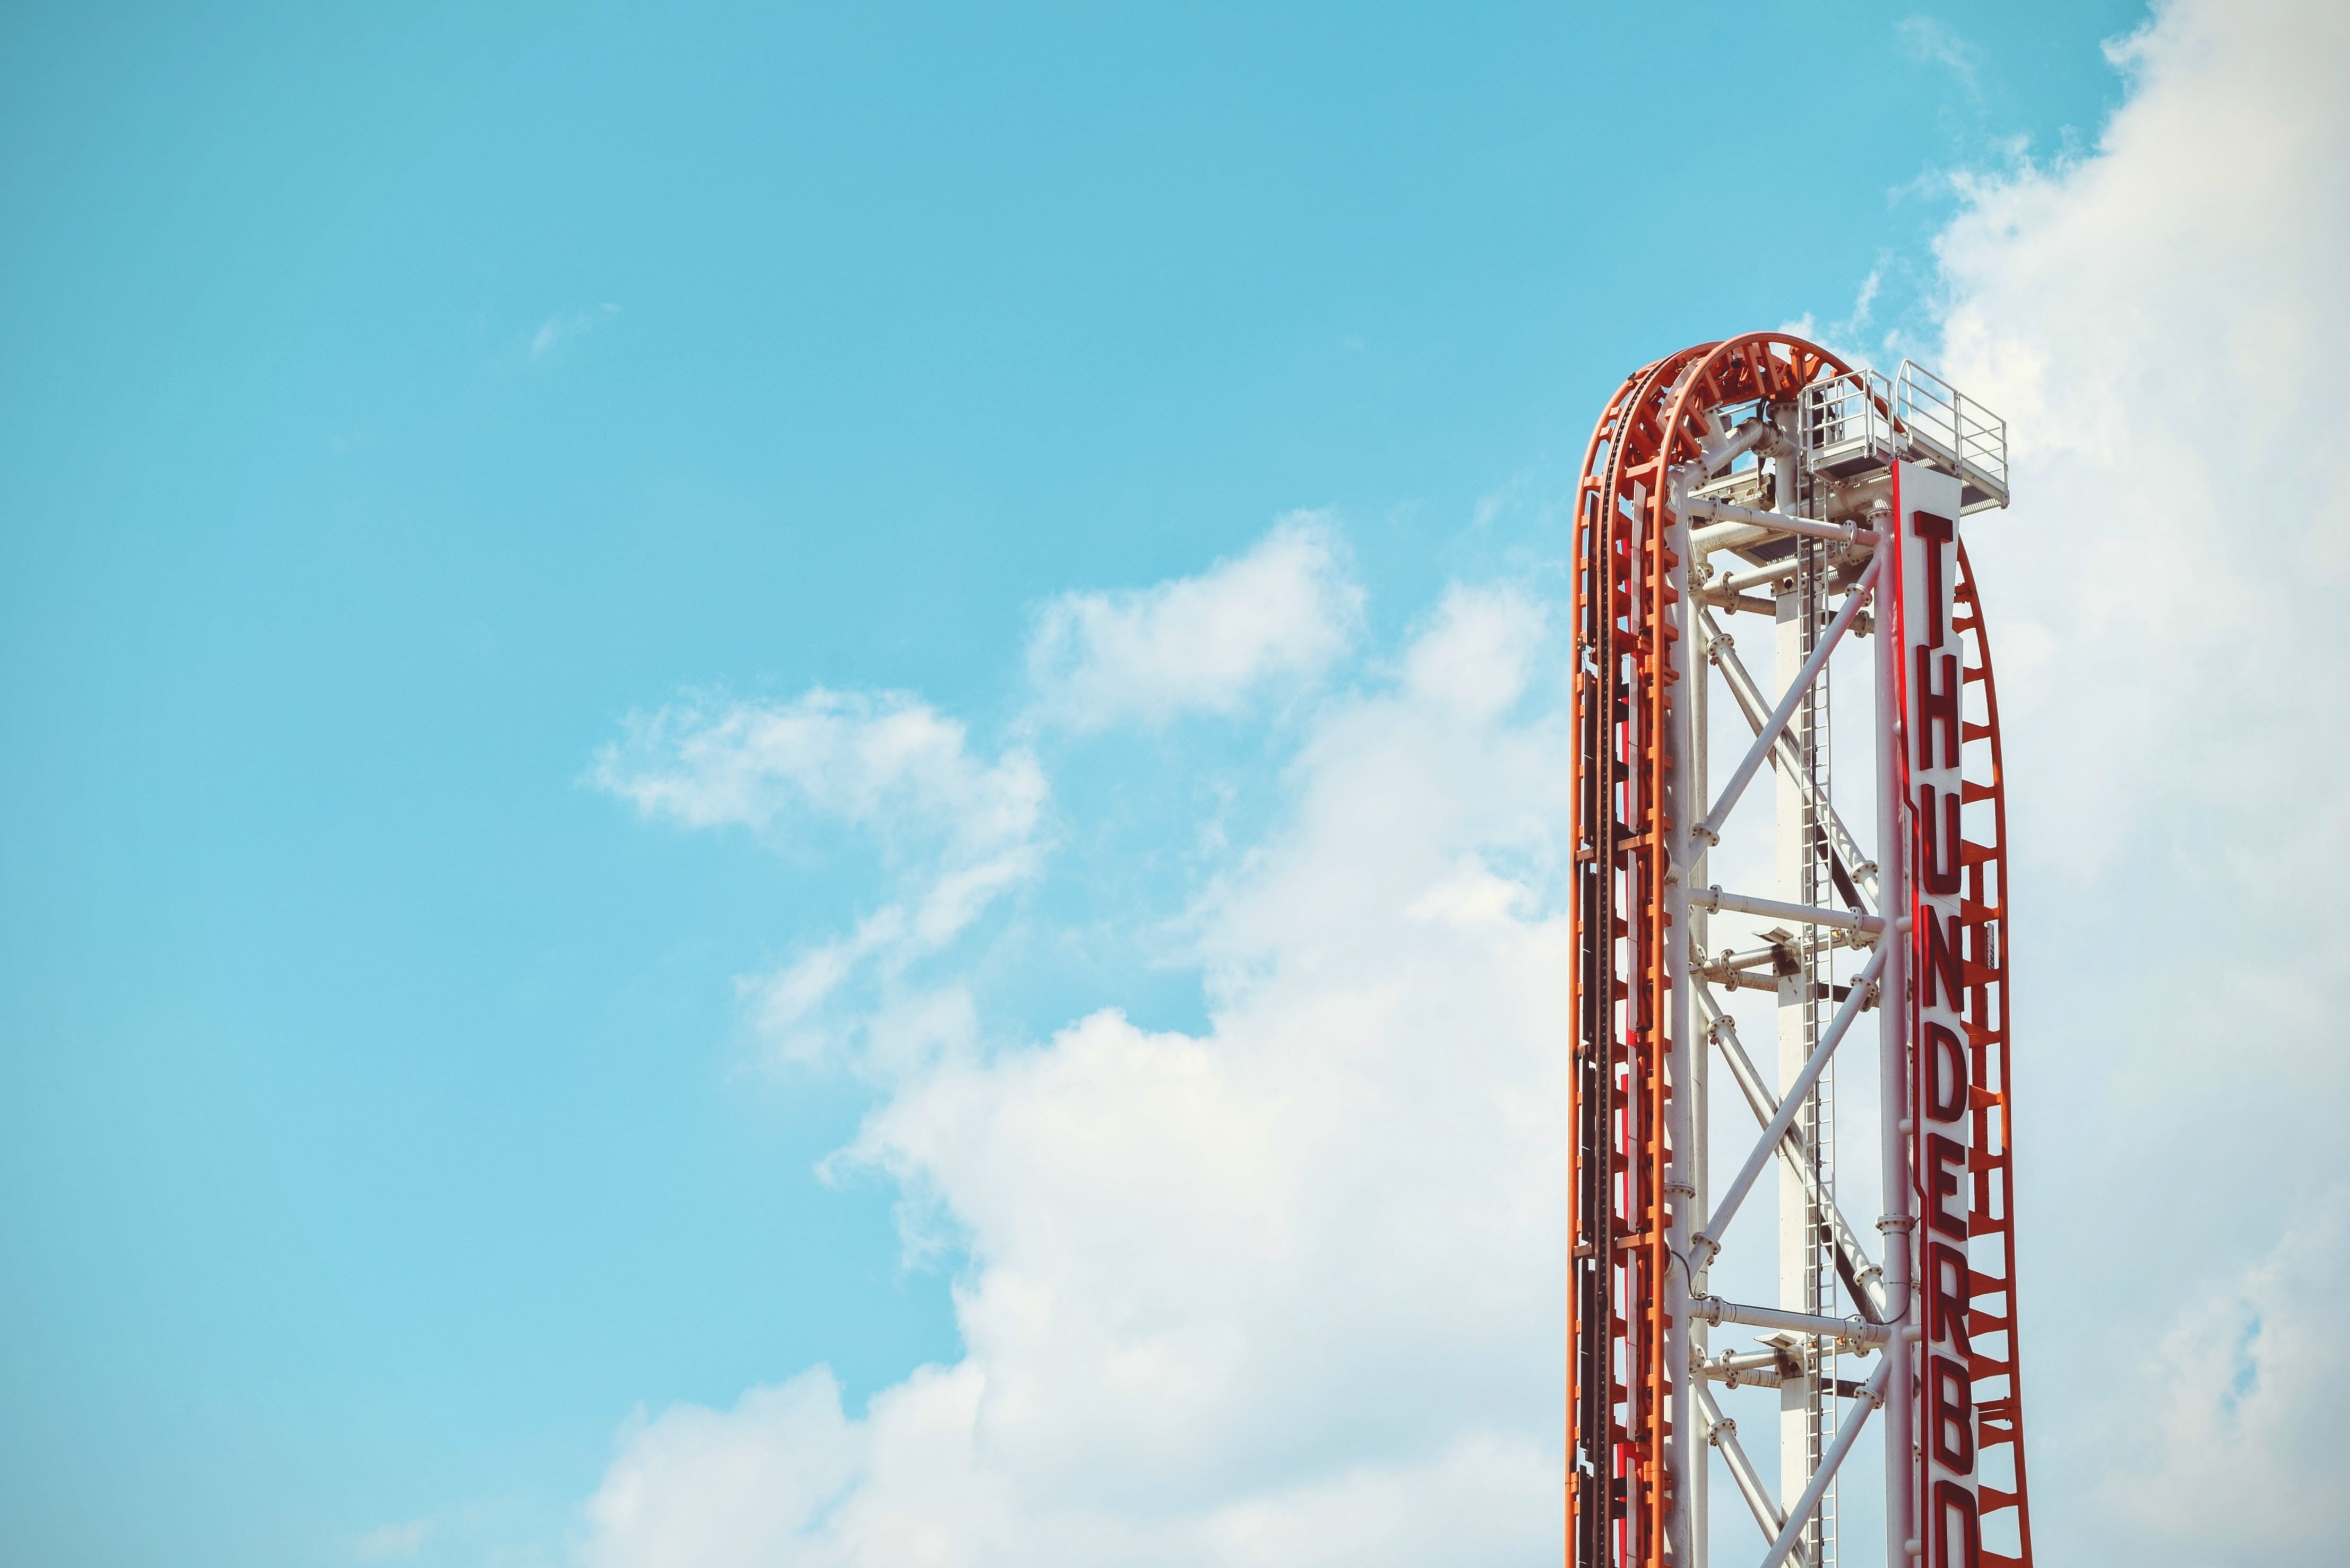 Thunderbolt roller coaster during daytime, rails, amusement park